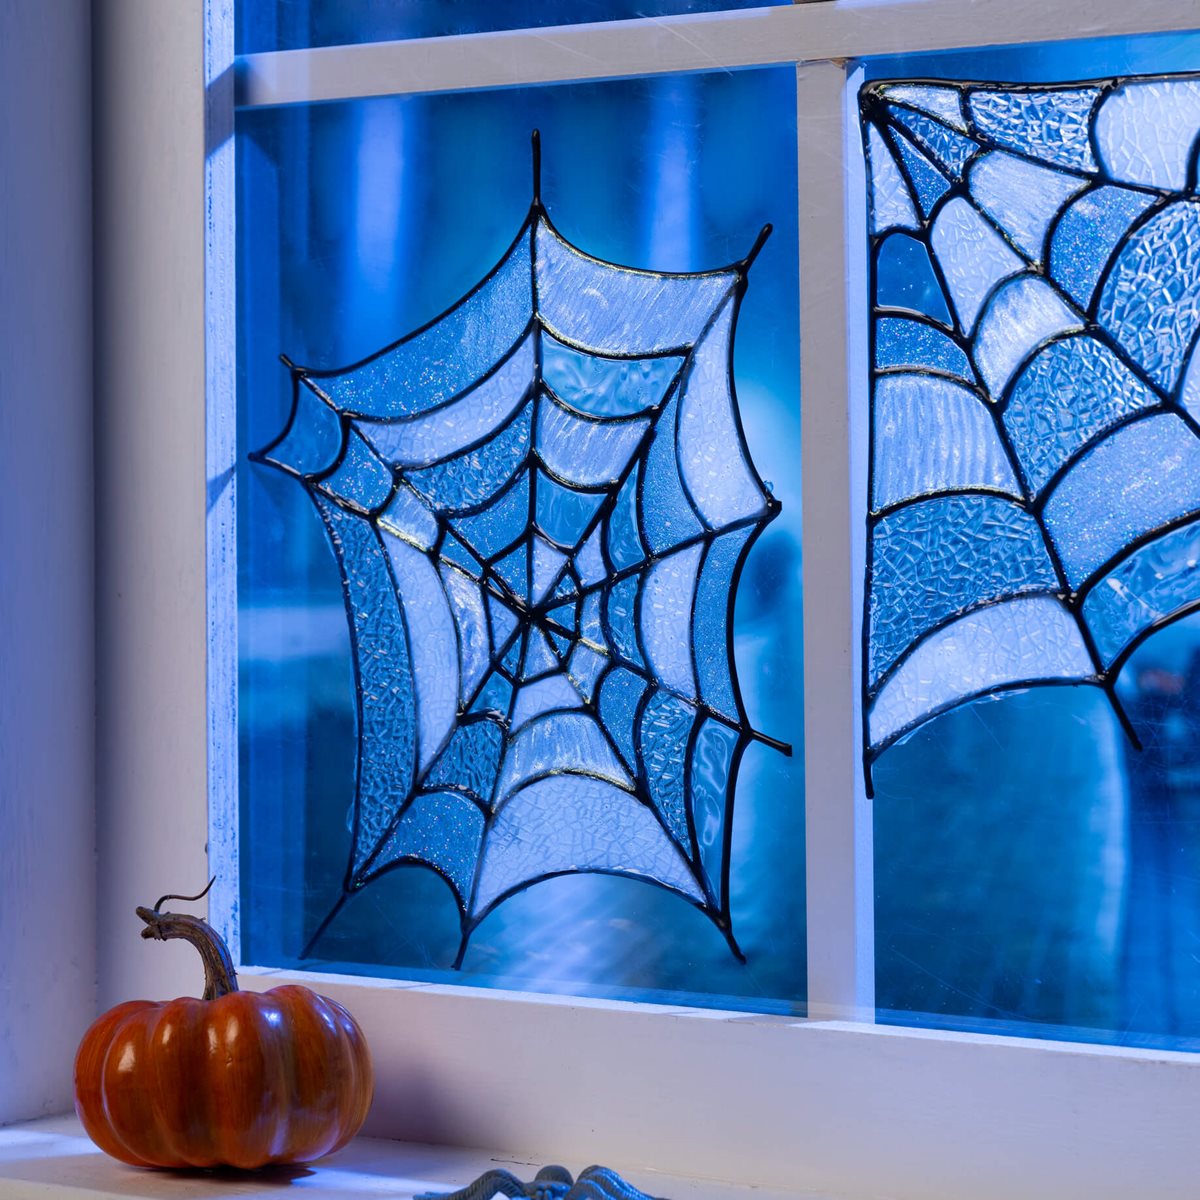 Gallery Glass Spider Webs